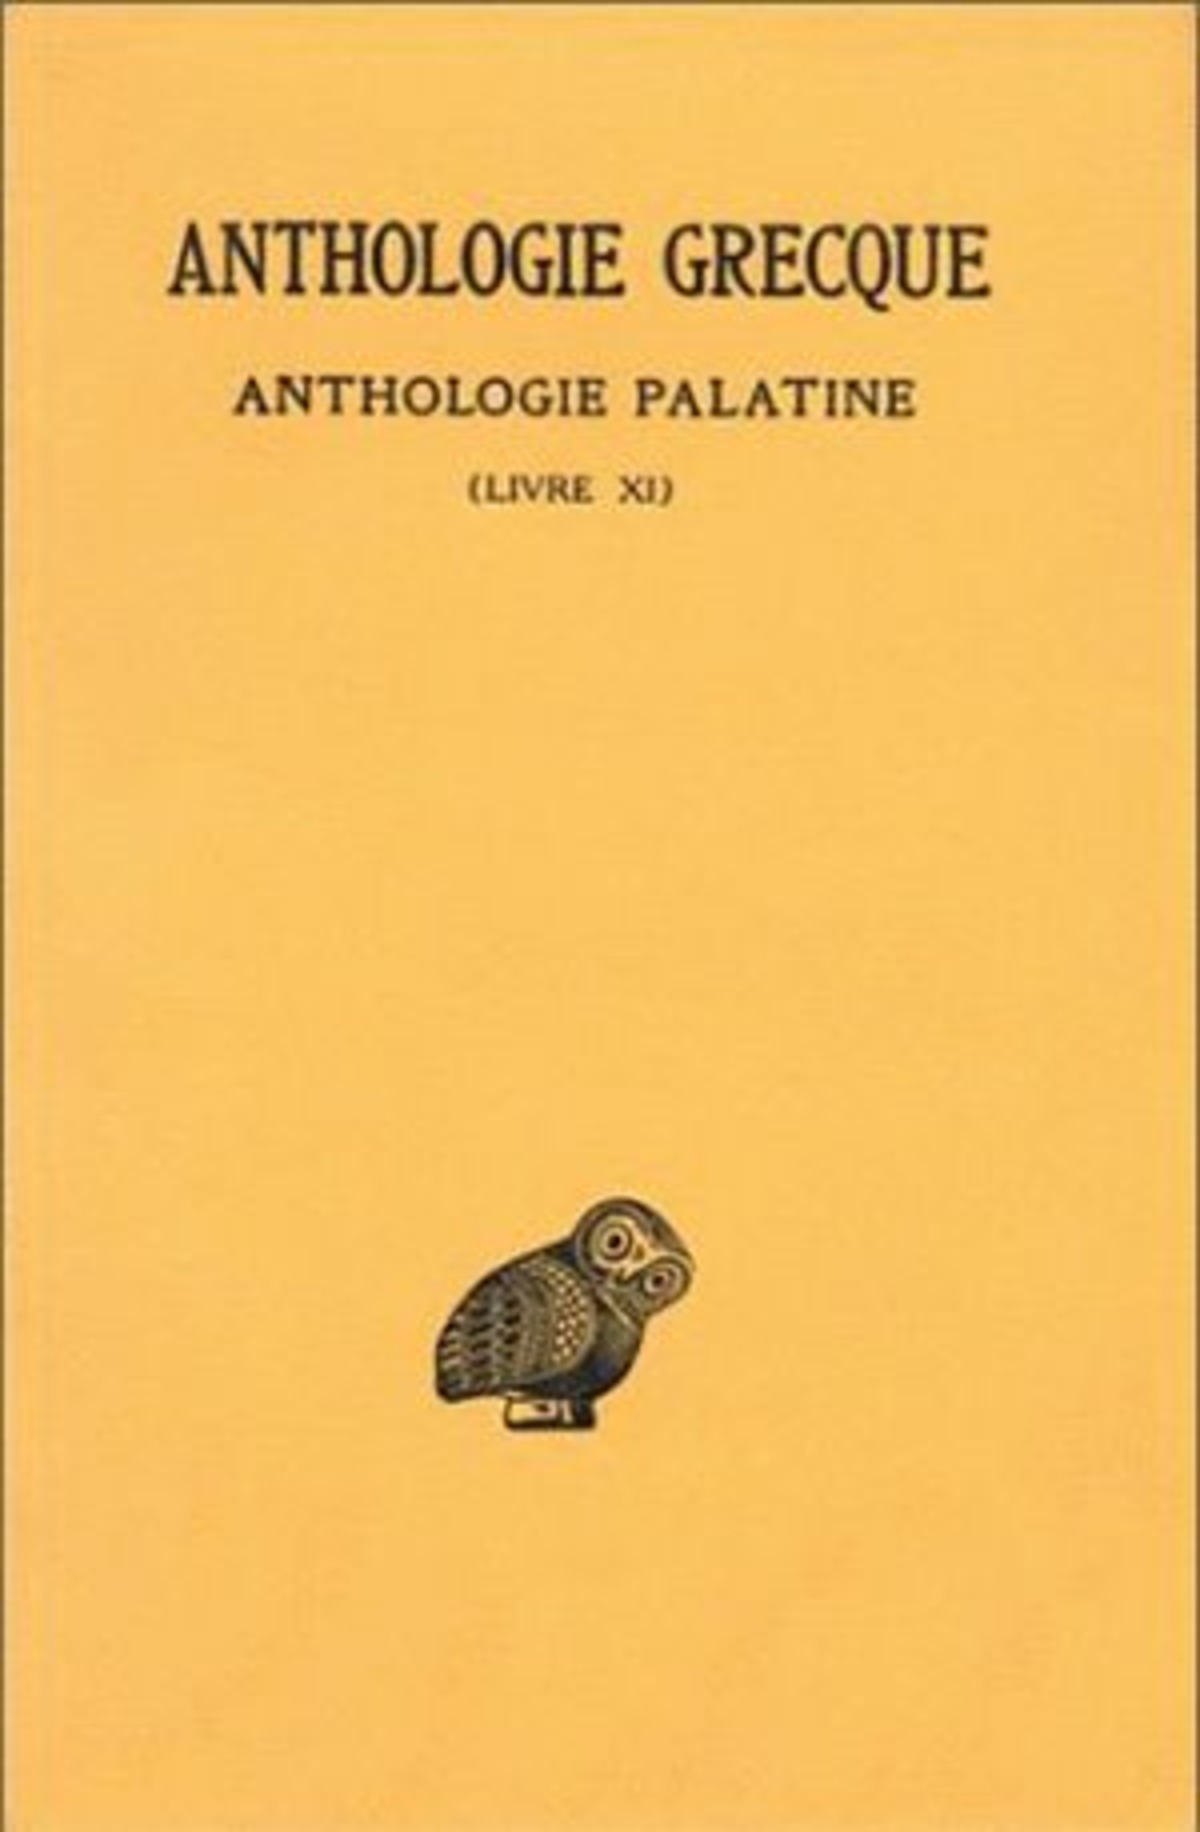 Anthologie grecque. Tome X: Anthologie palatine, Livre XI